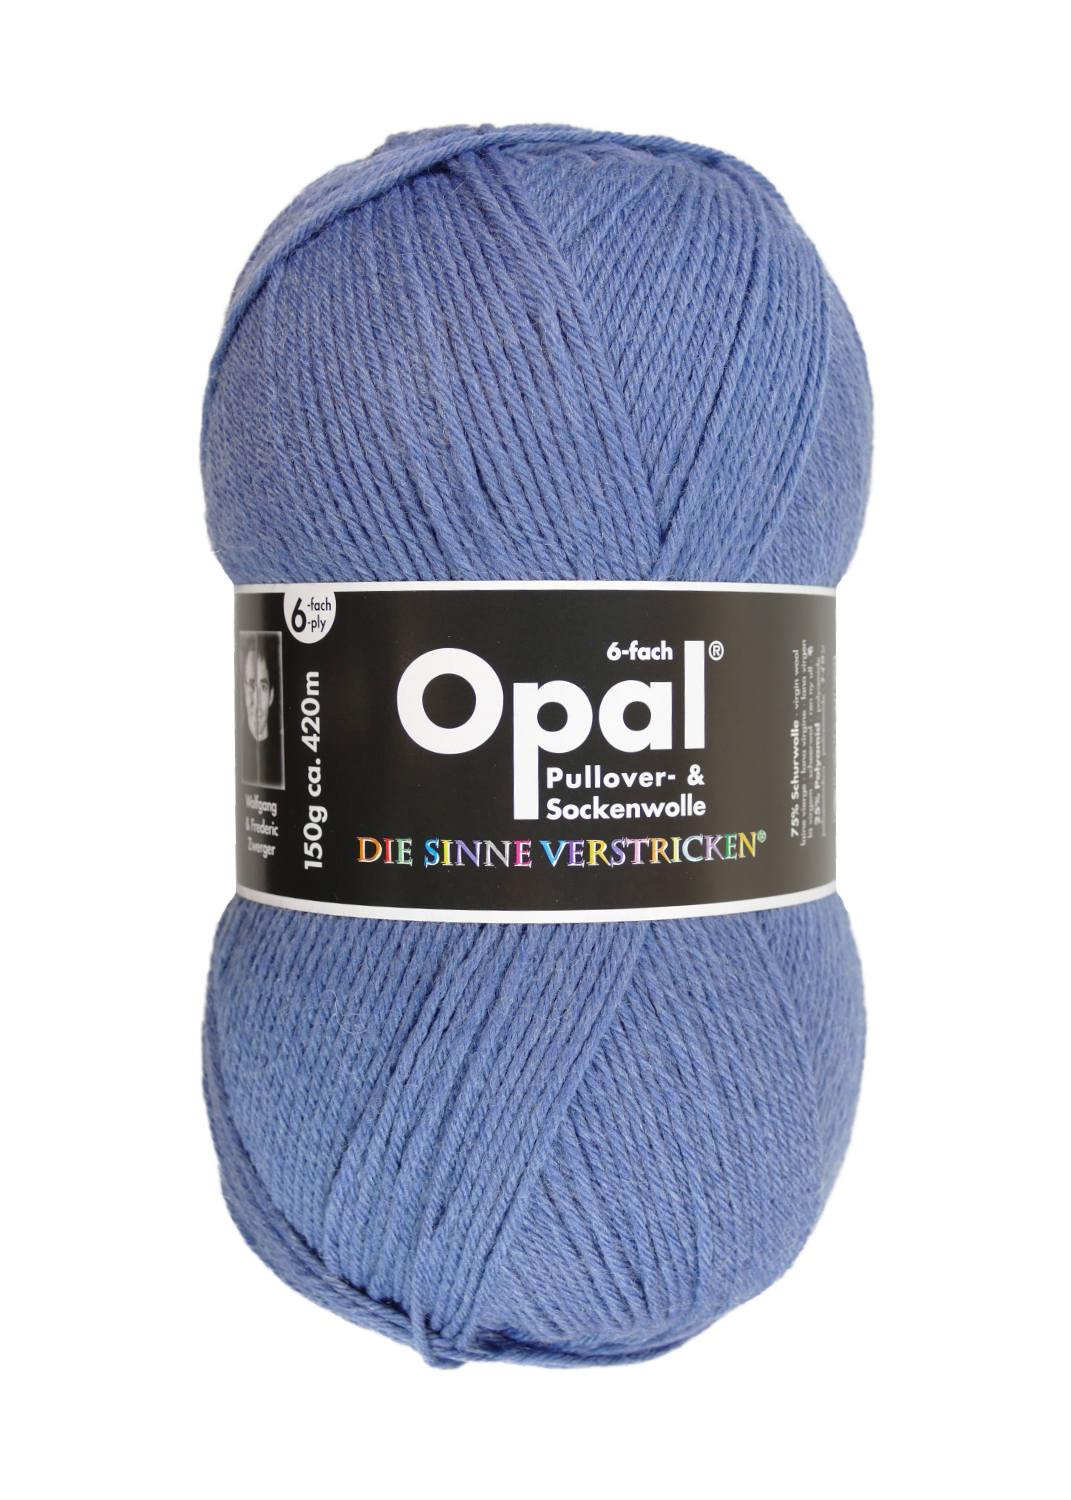 OPAL Uni - 6-fach Sockenwolle 5307 - jeansblau